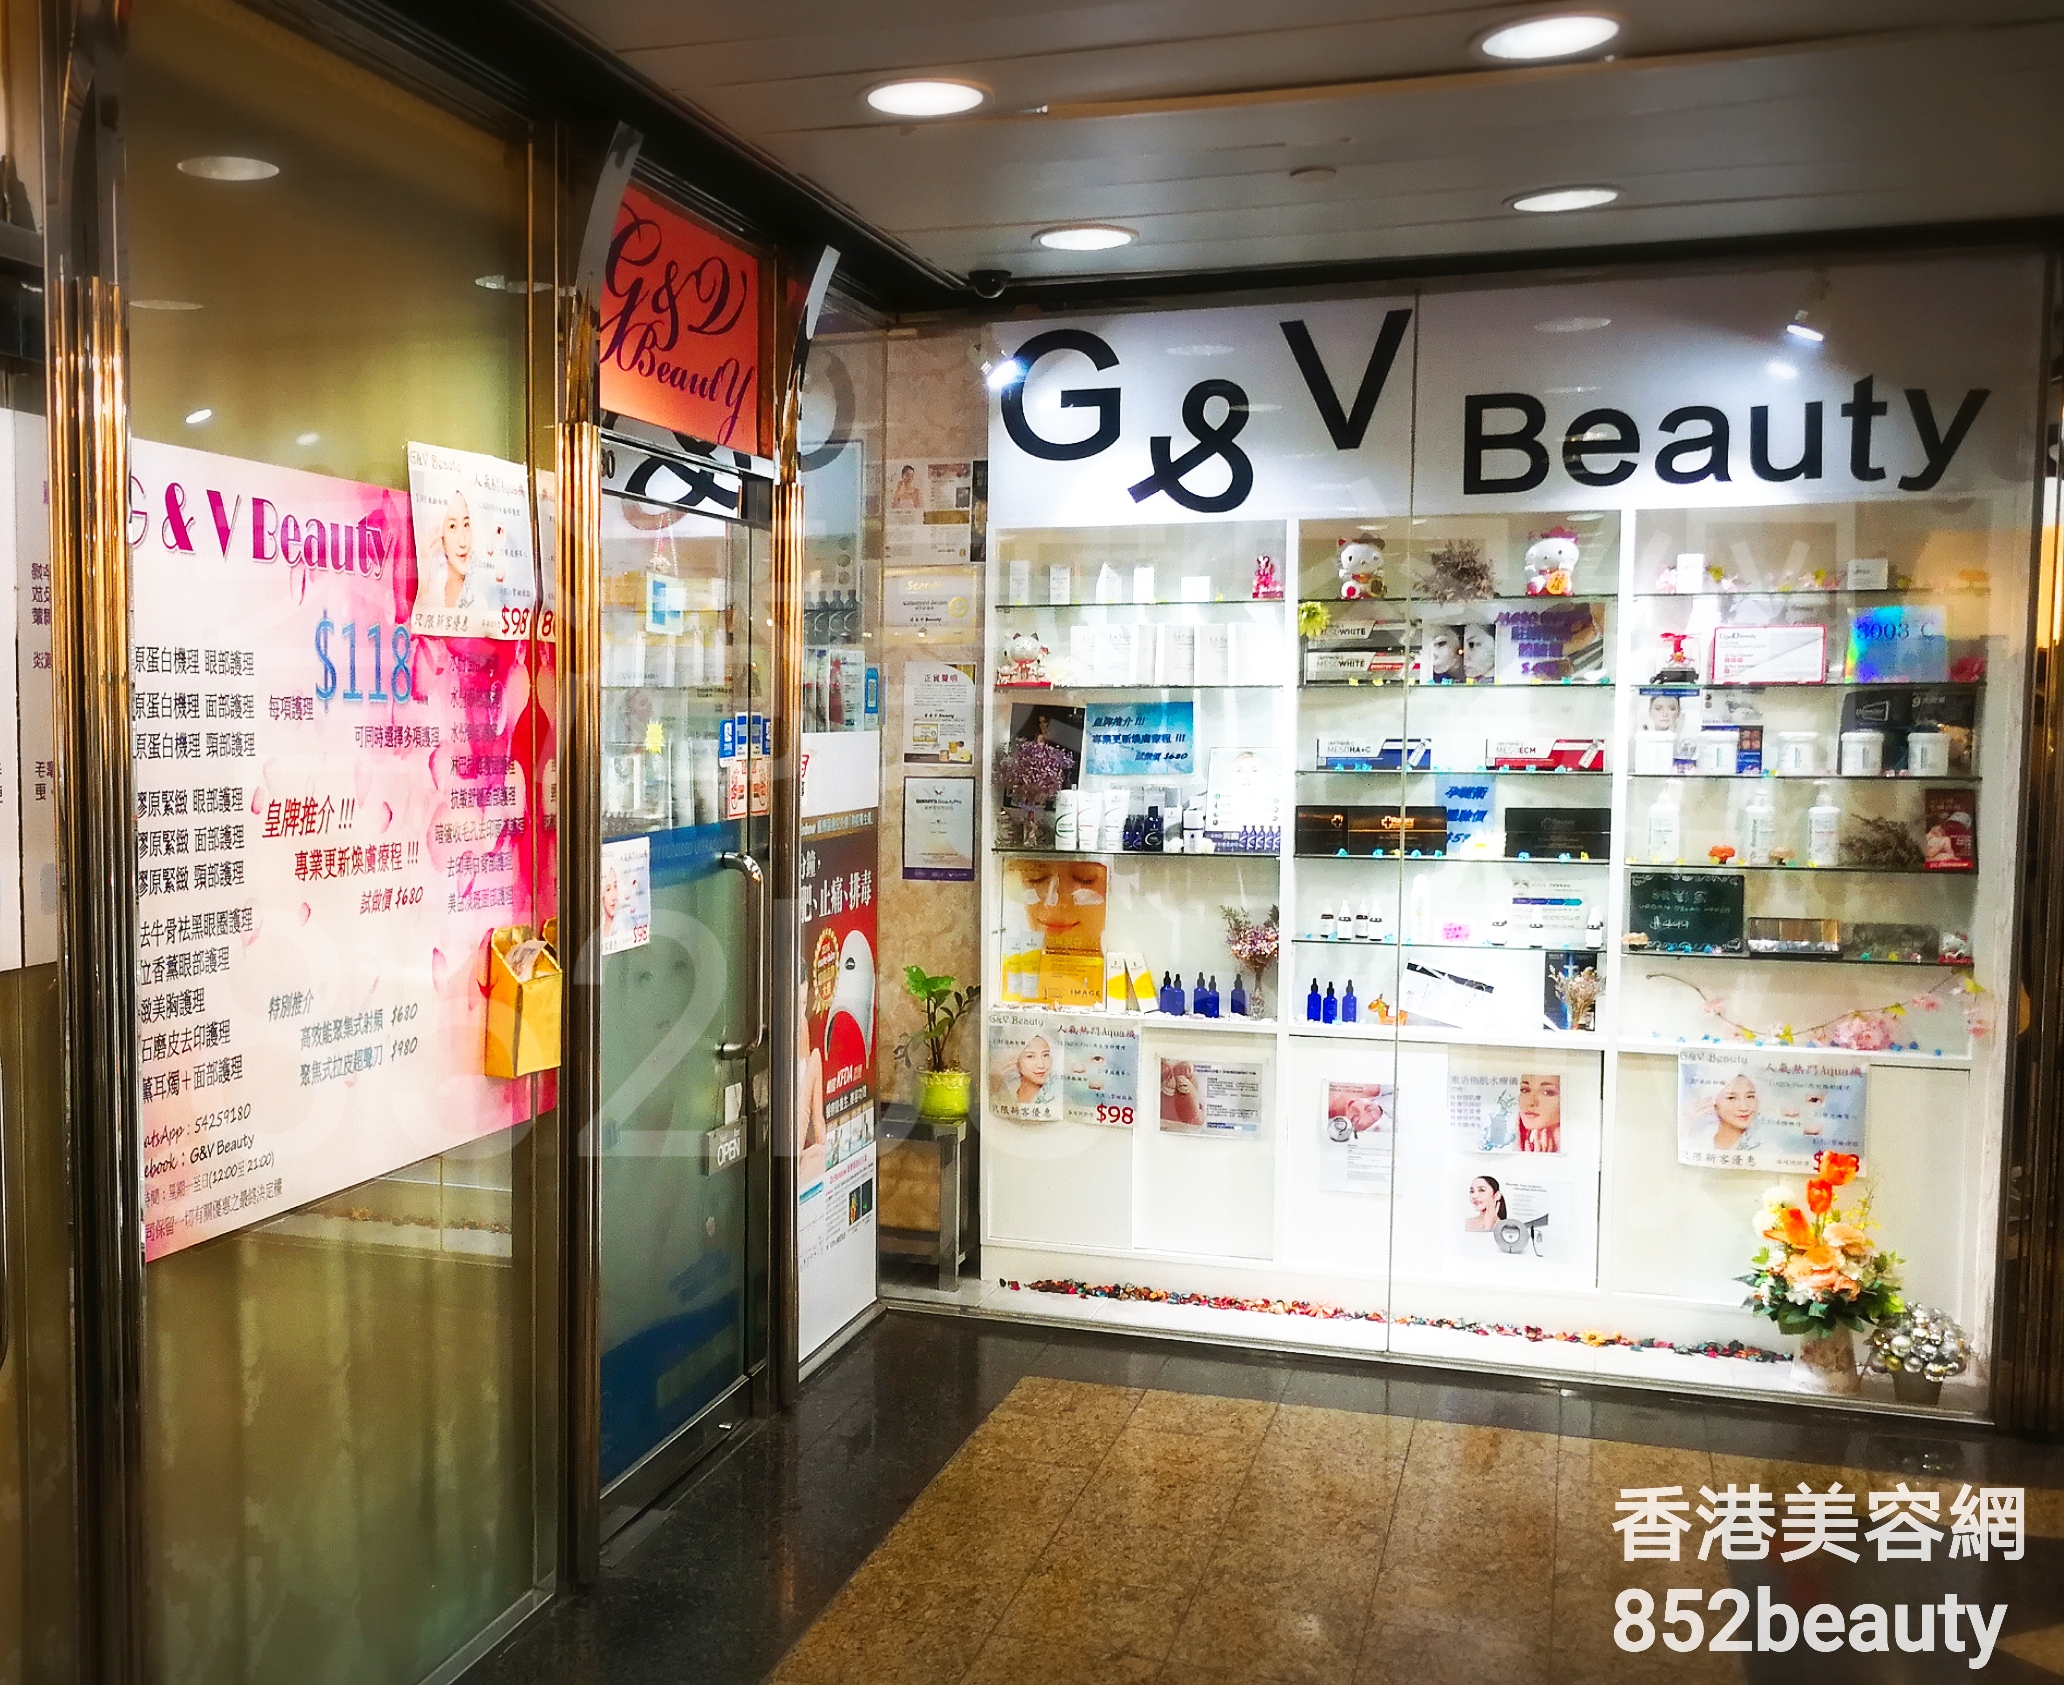 眼部护理: G&V Beauty